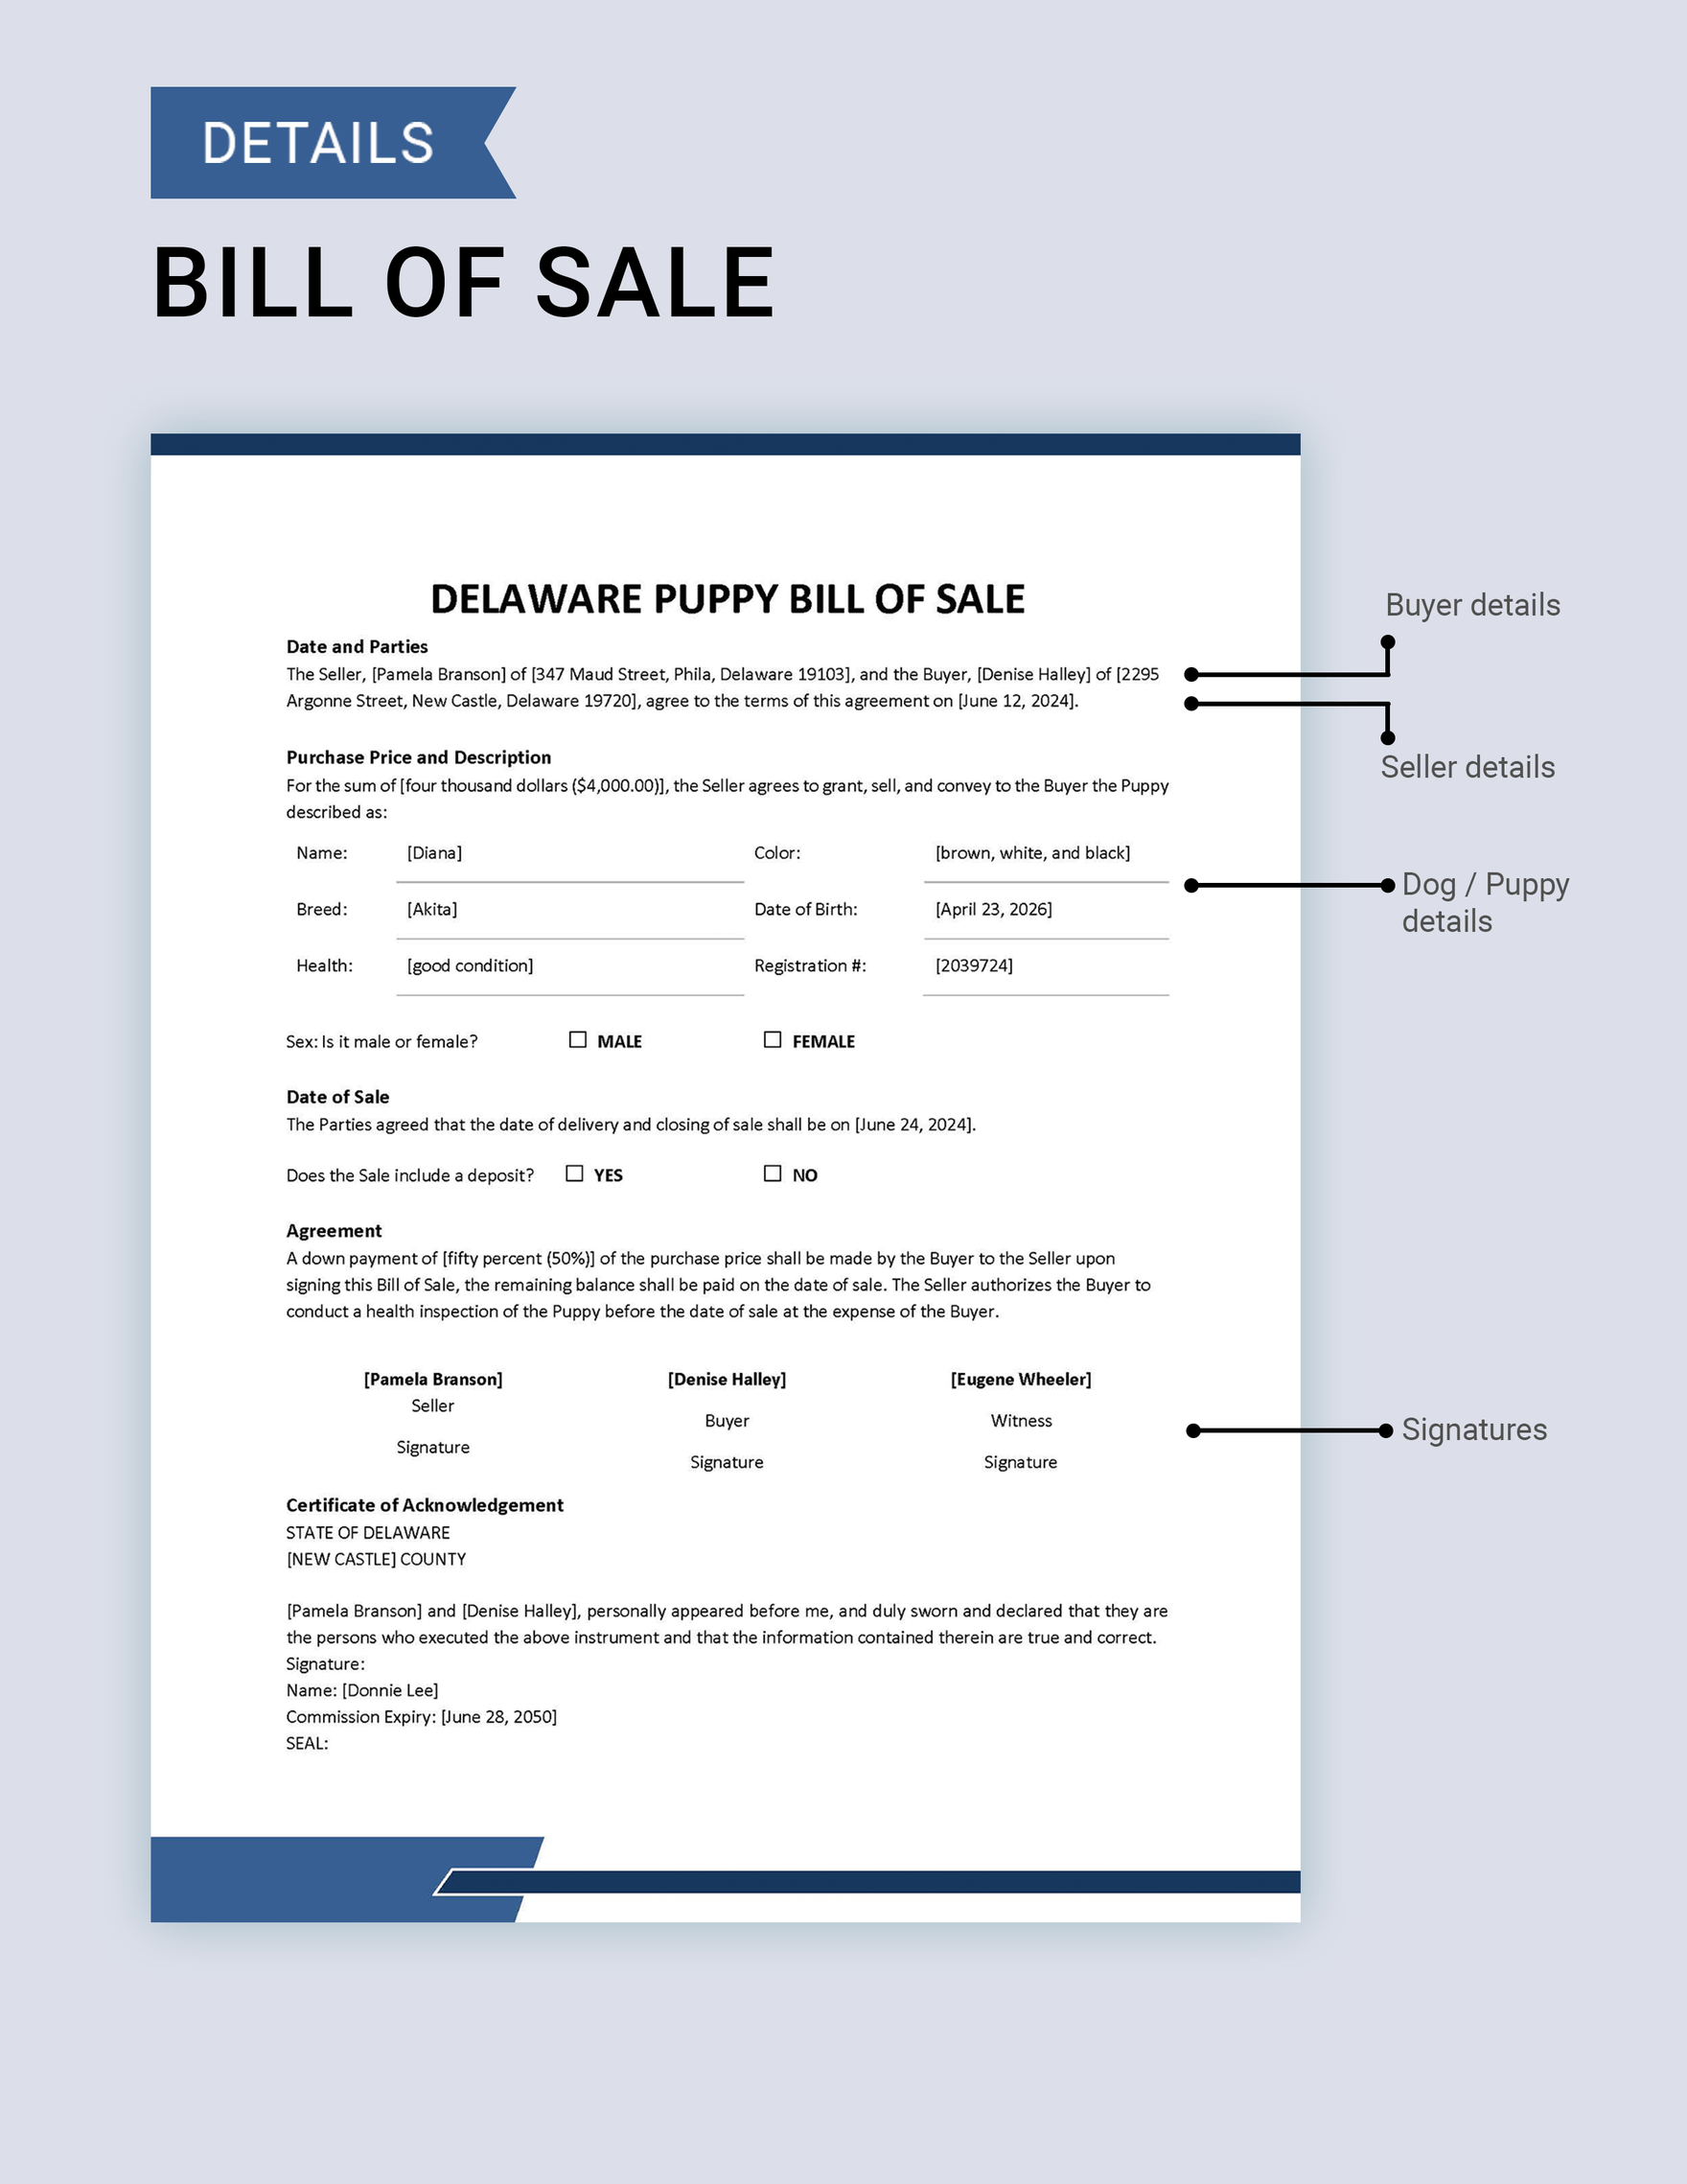 Delaware Dog / Puppy Bill of Sale Template